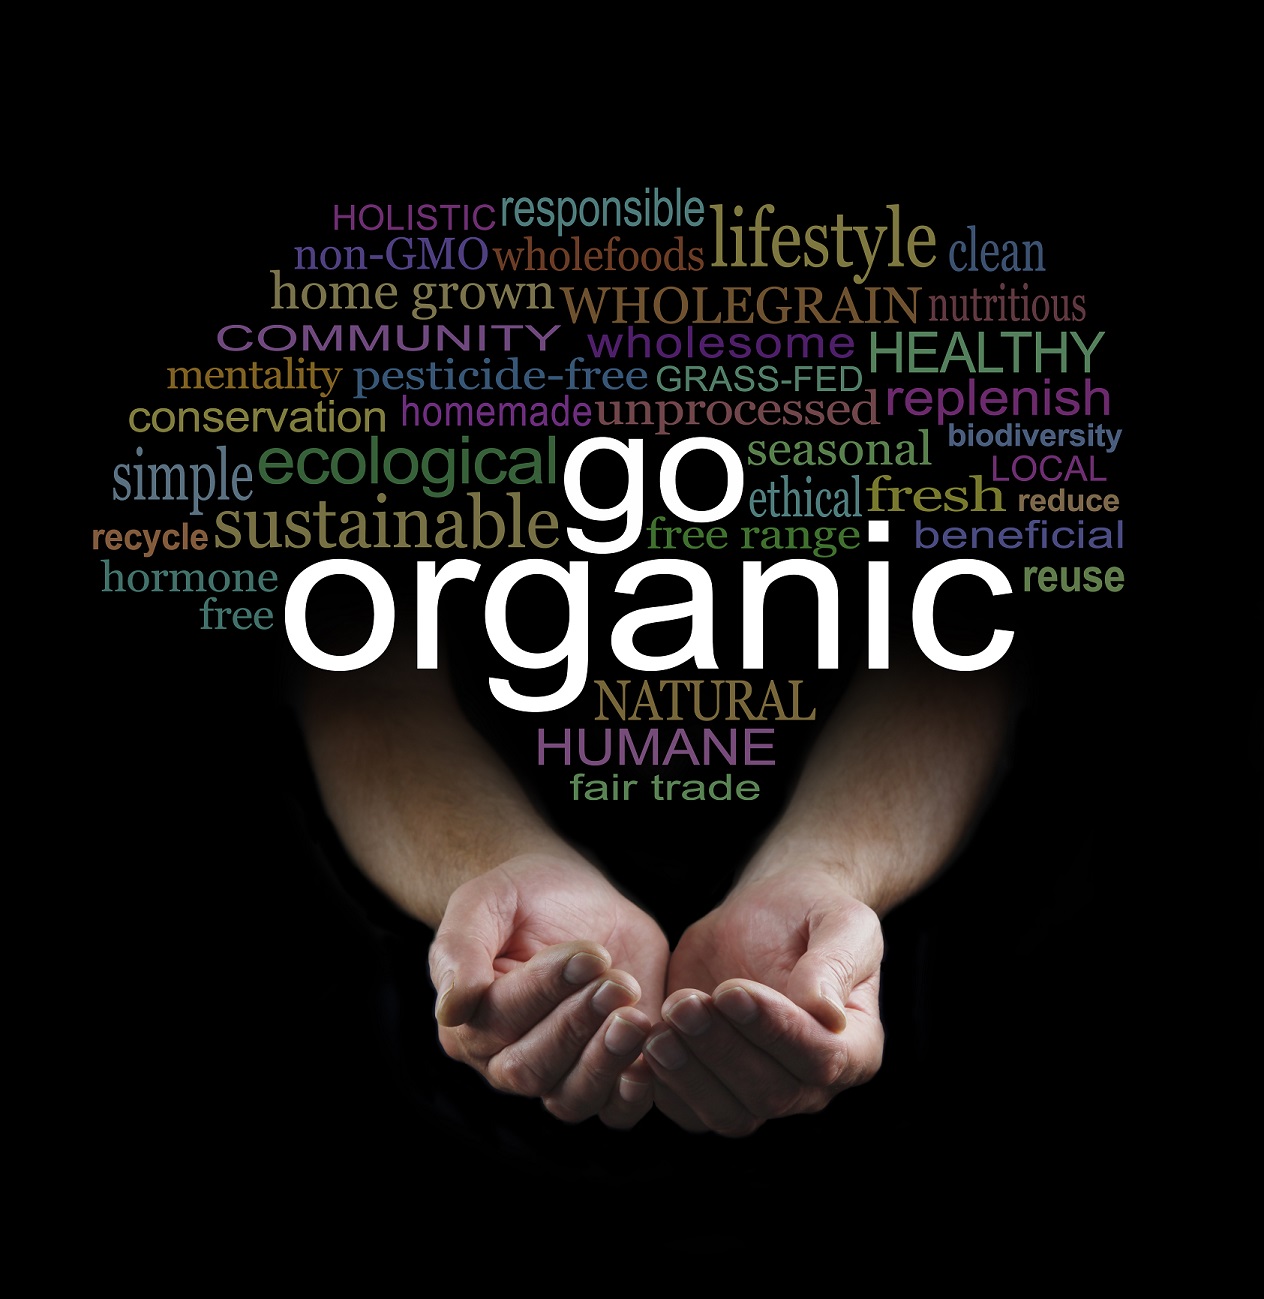 go-organic-campaign-poster